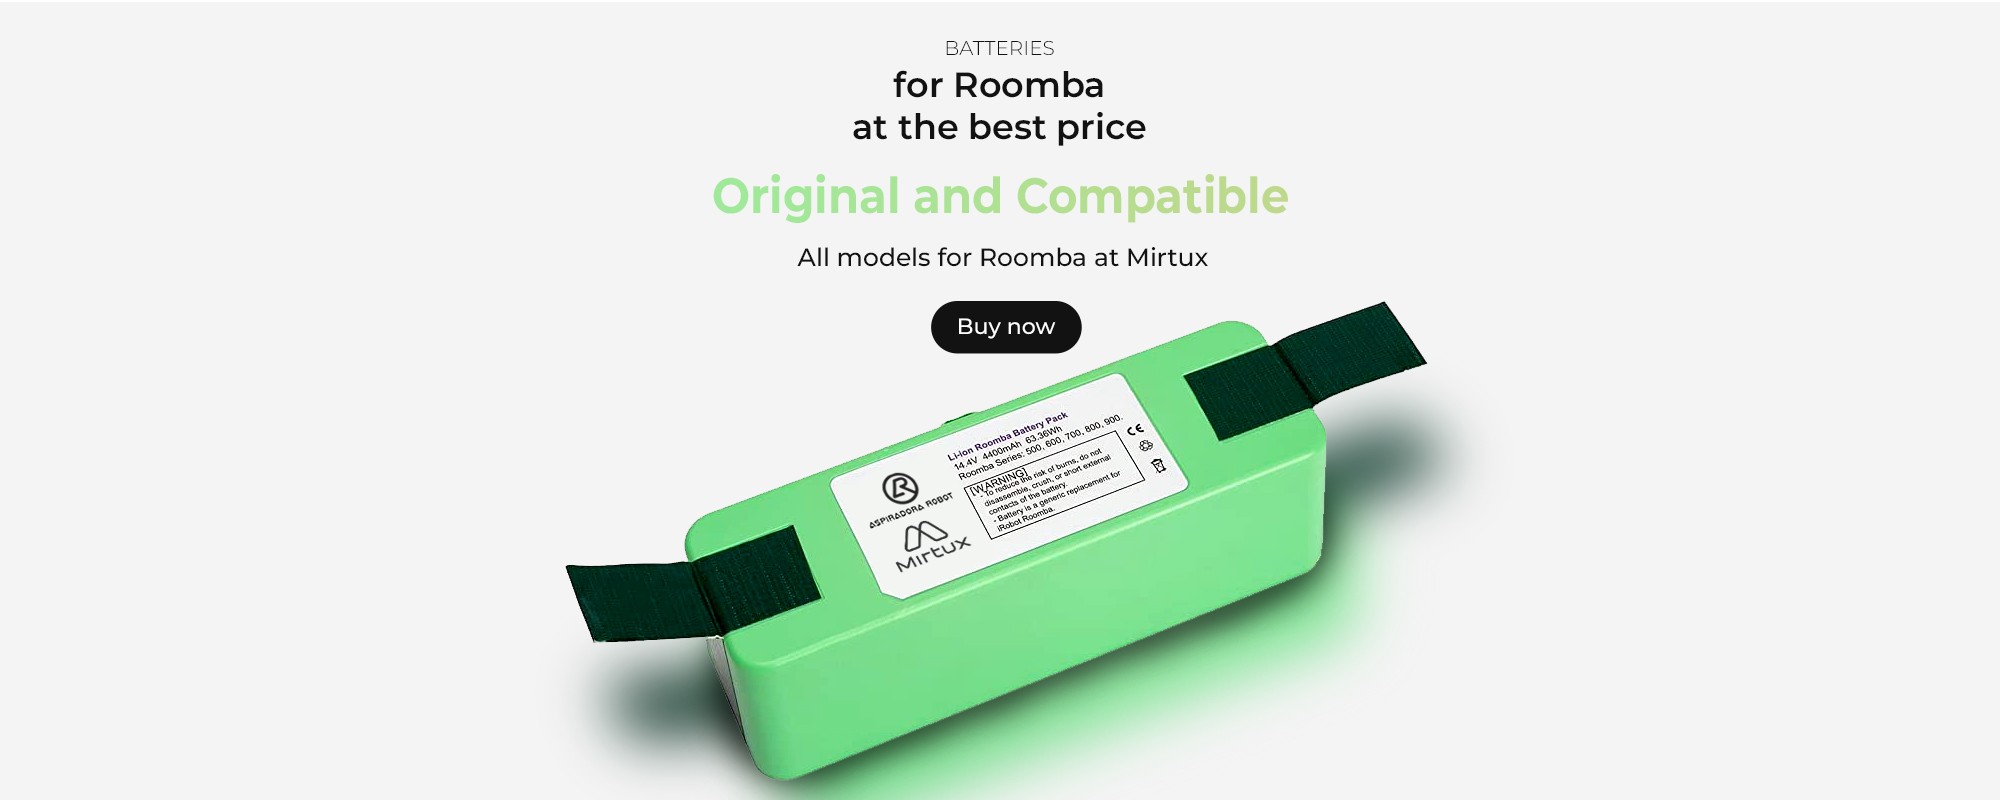 Batería Roomba - Serie 500, 600, 700, 800, 900, e, i, j - Mirtux